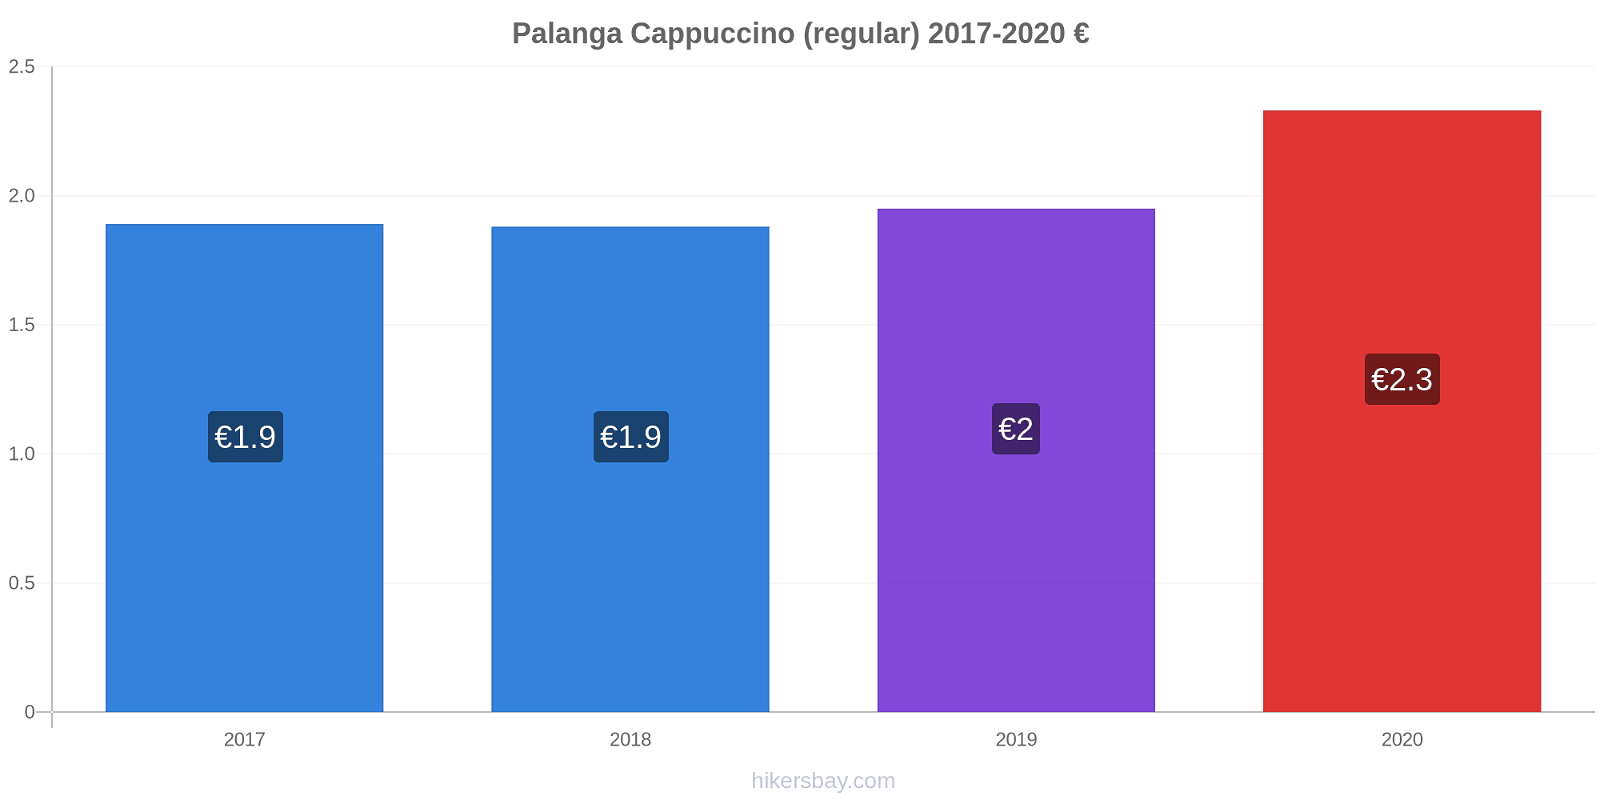 Palanga price changes Cappuccino (regular) hikersbay.com